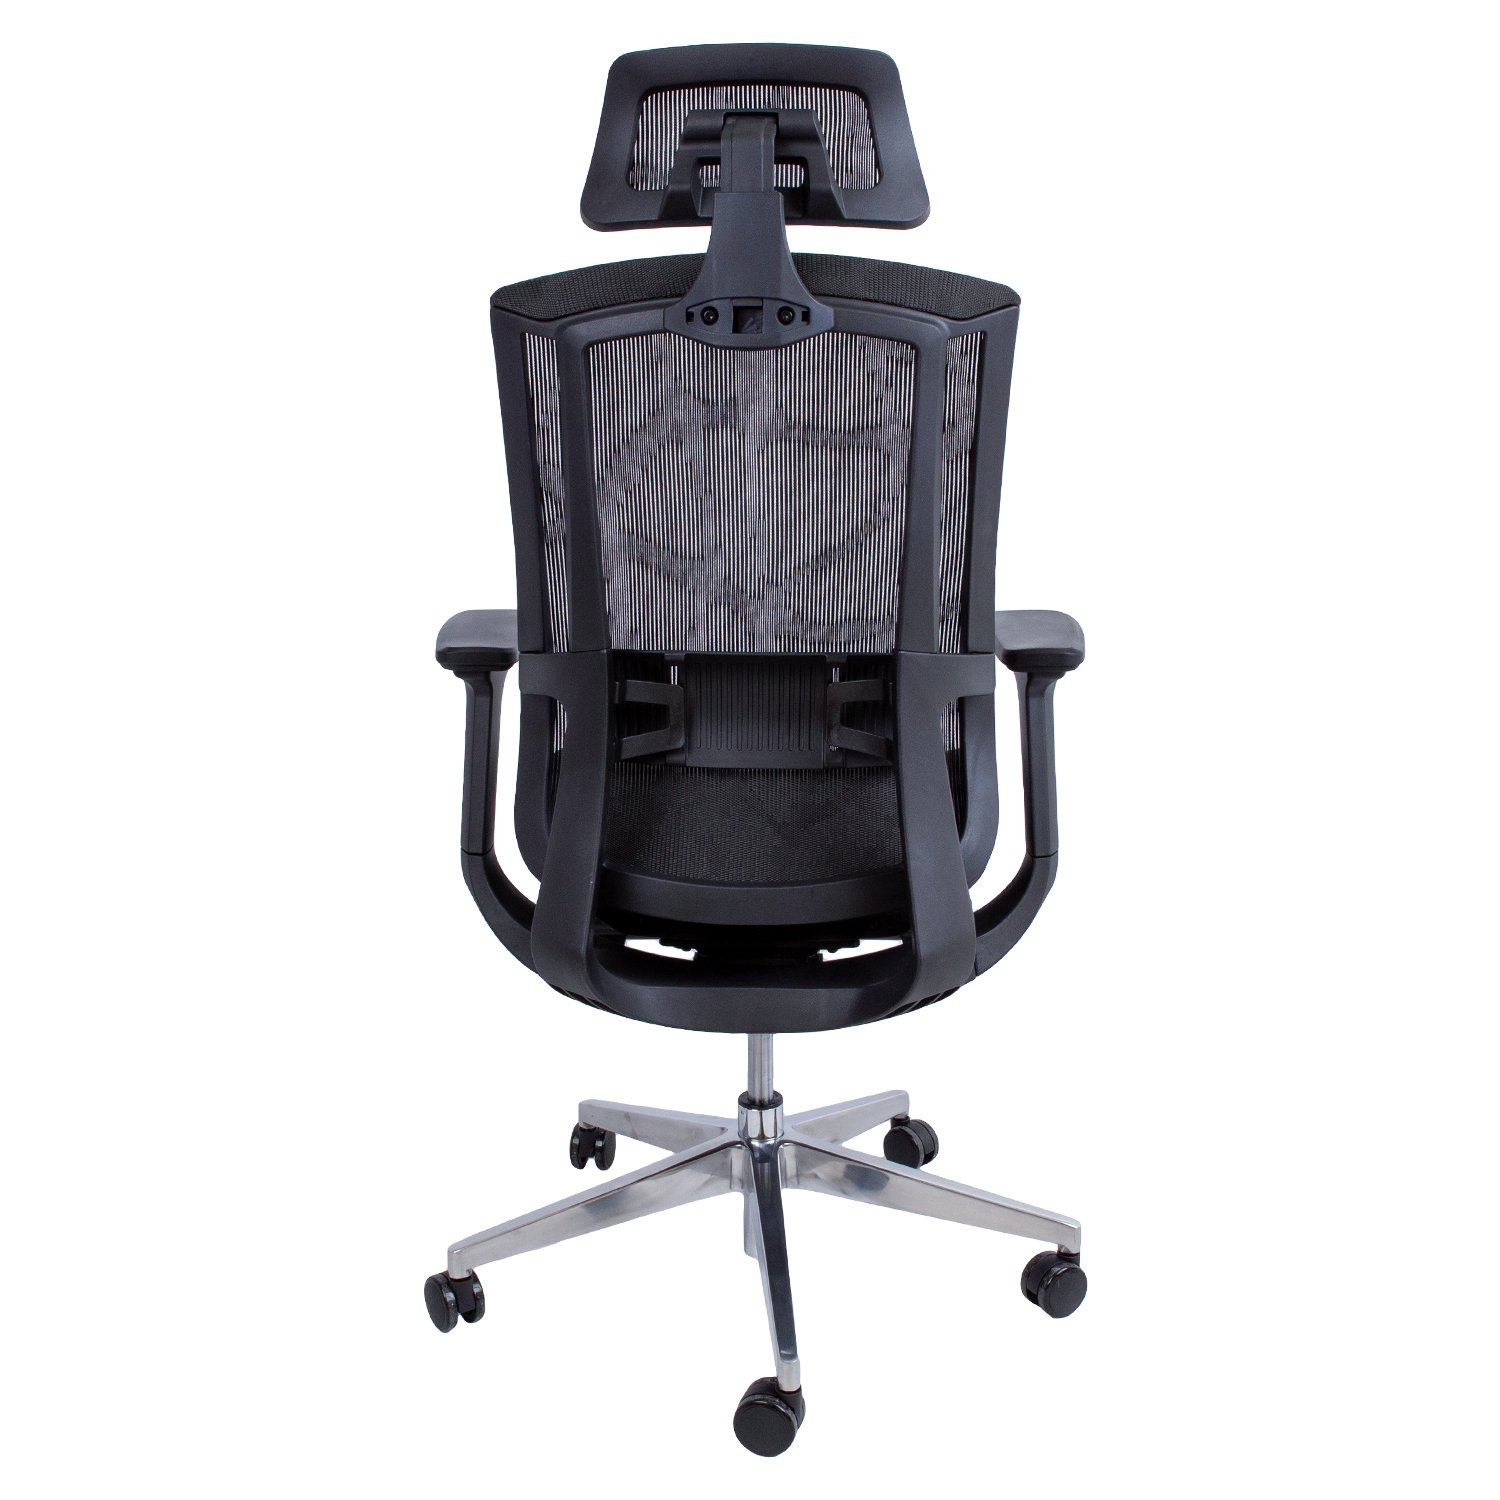 Biuro kėdė FLEX, 70x70xH116-126 cm, juoda - 3